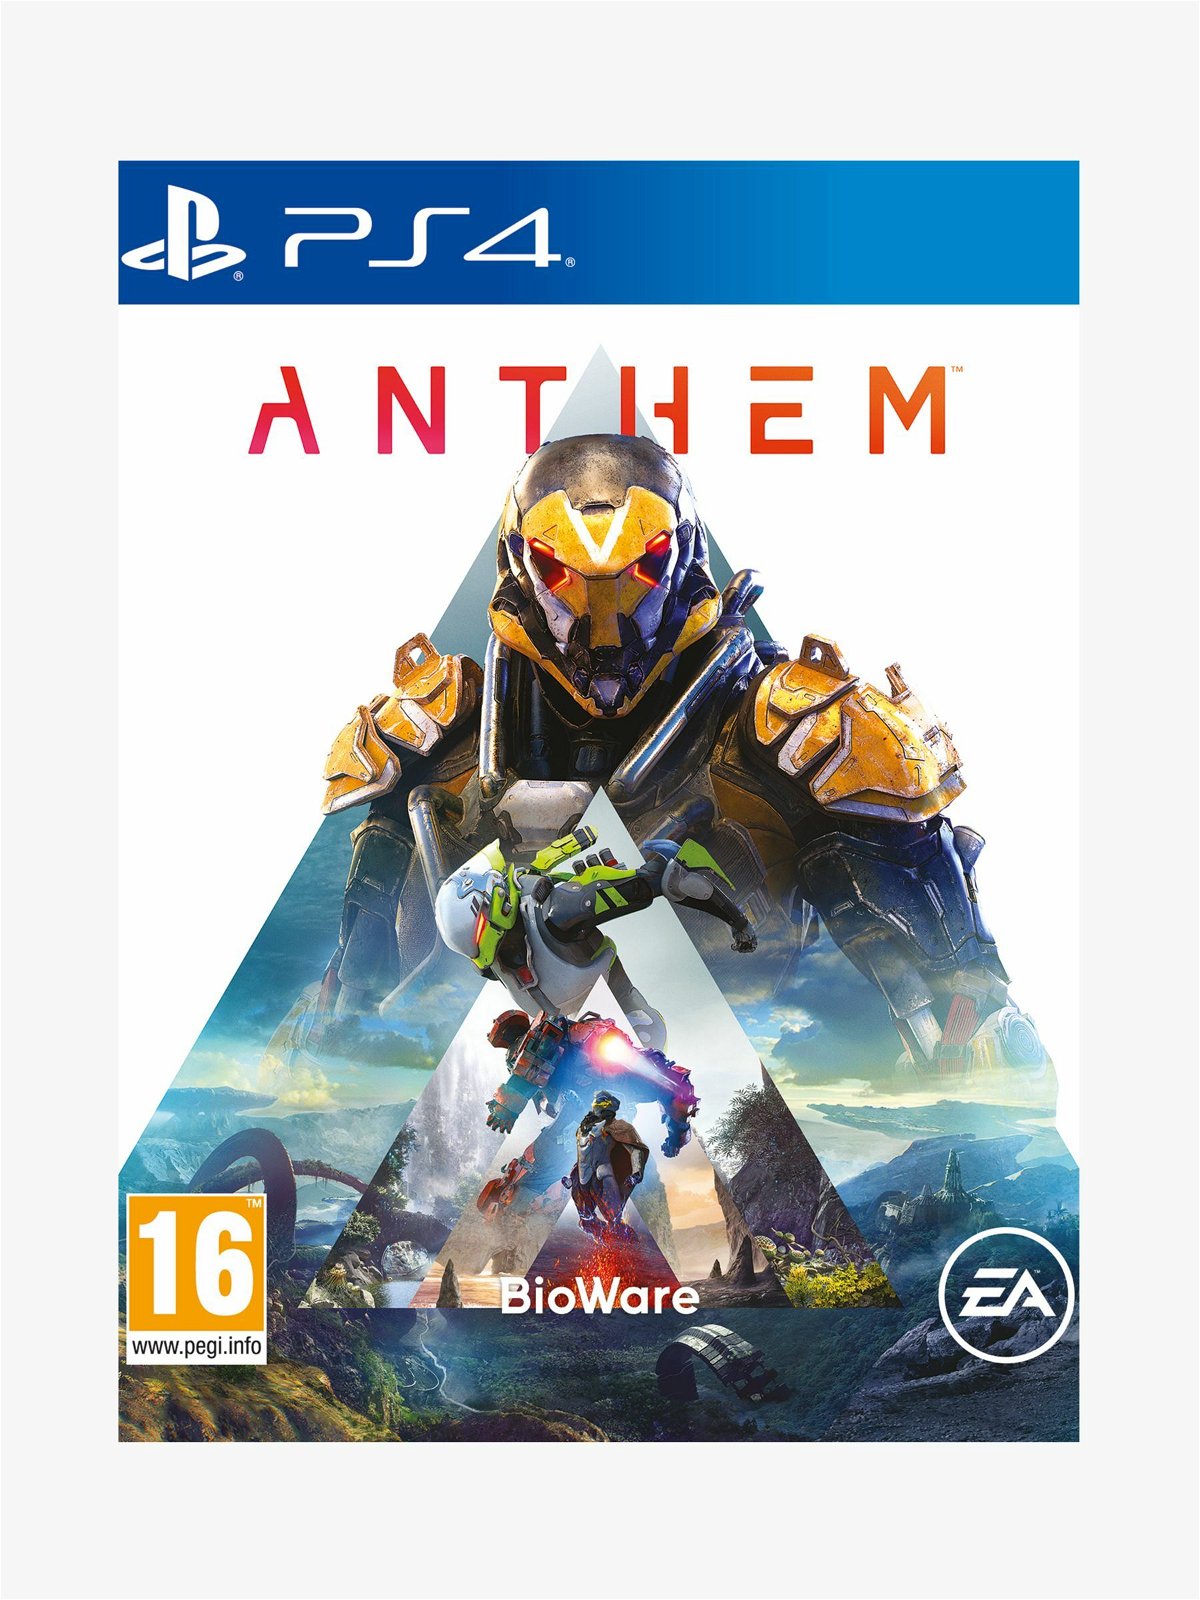 La copertina di Anthem per PlayStation 4